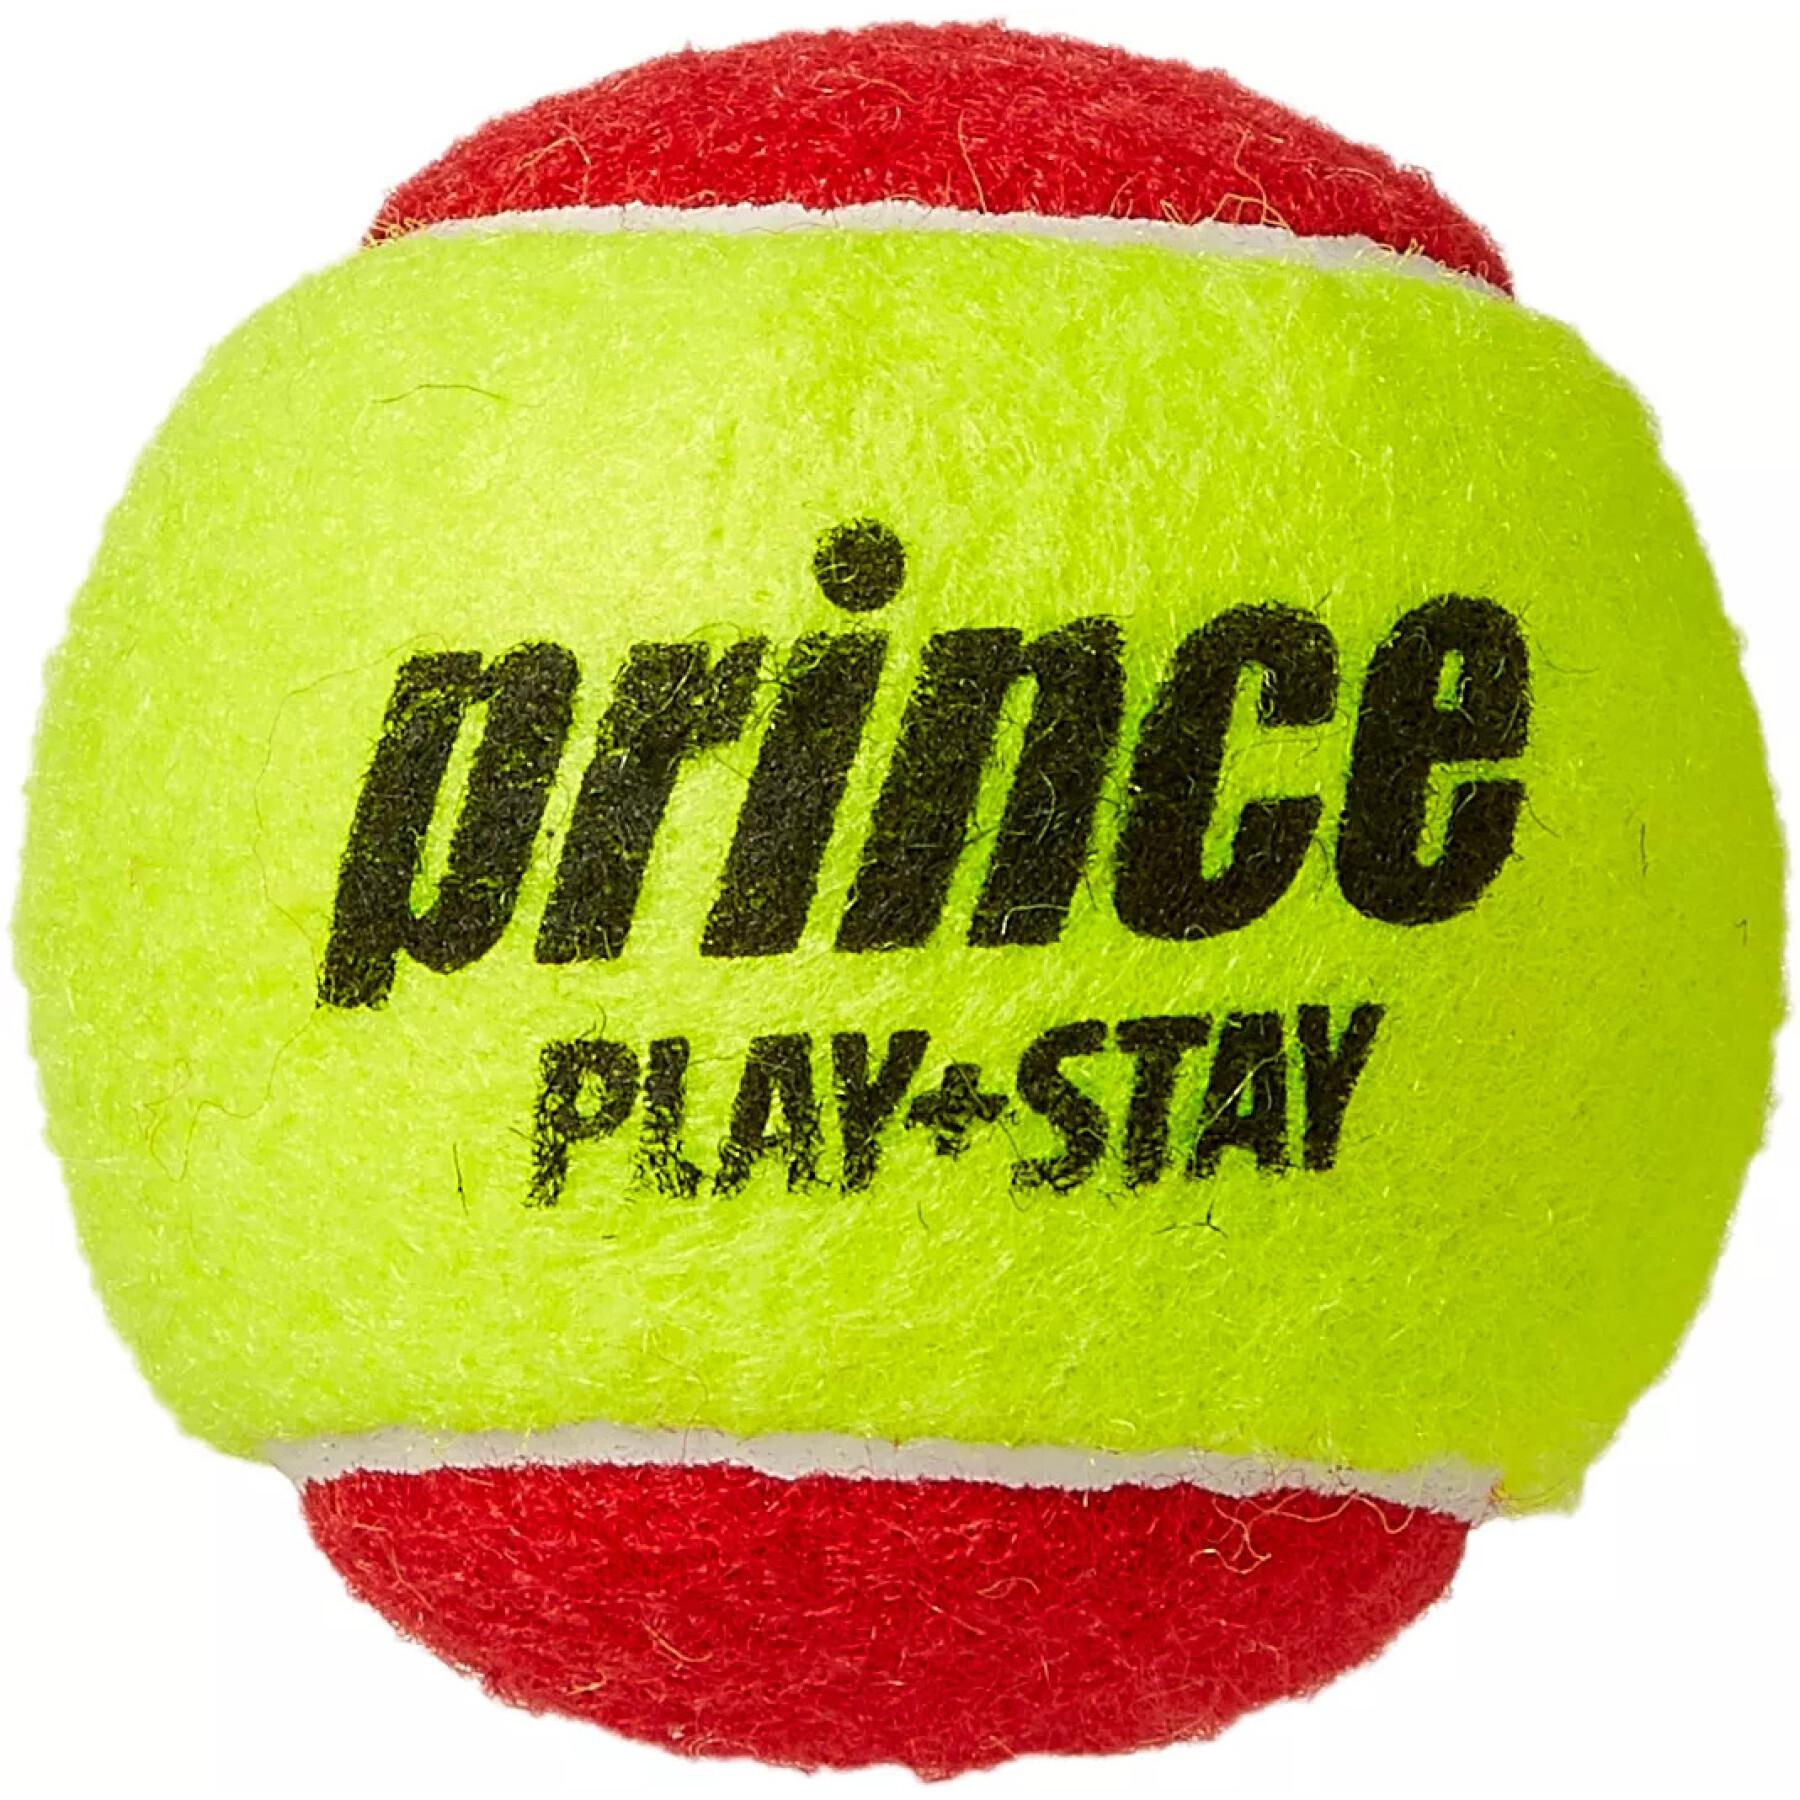 Conjunto de 3 bolas de ténis Prince Play & Stay – stage 3 (felt)